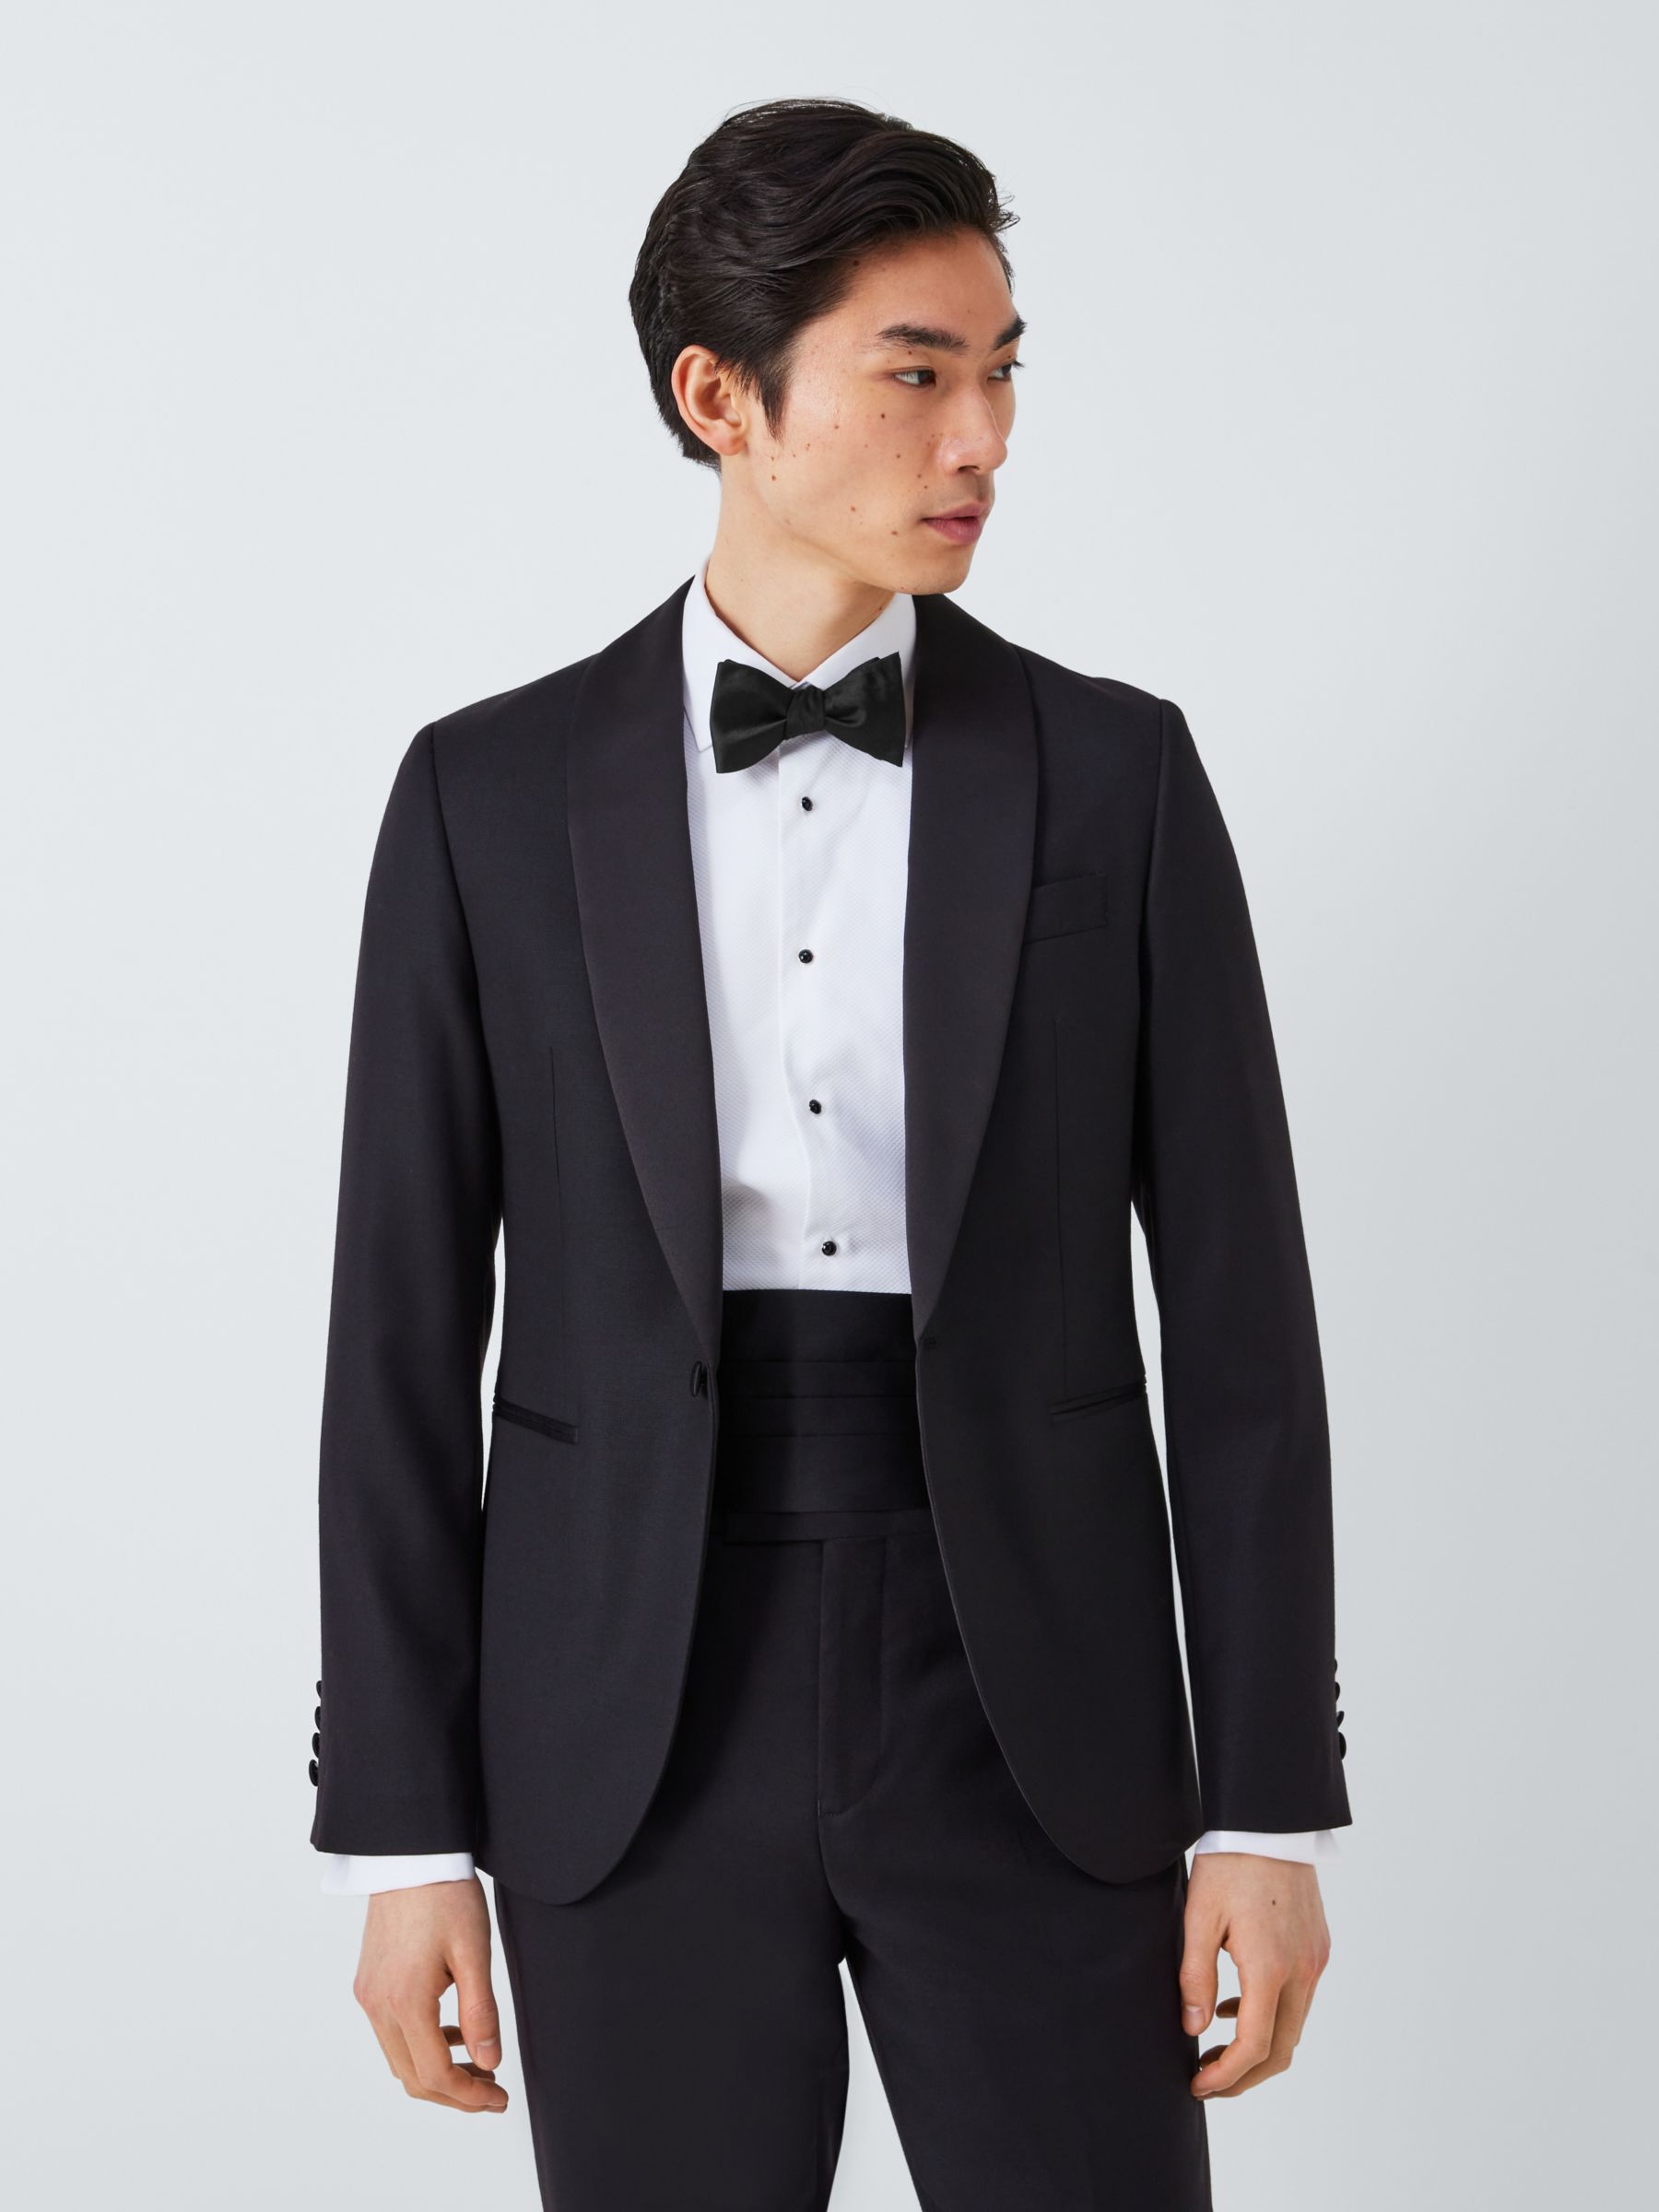 Essential black silk self-tie bow tie